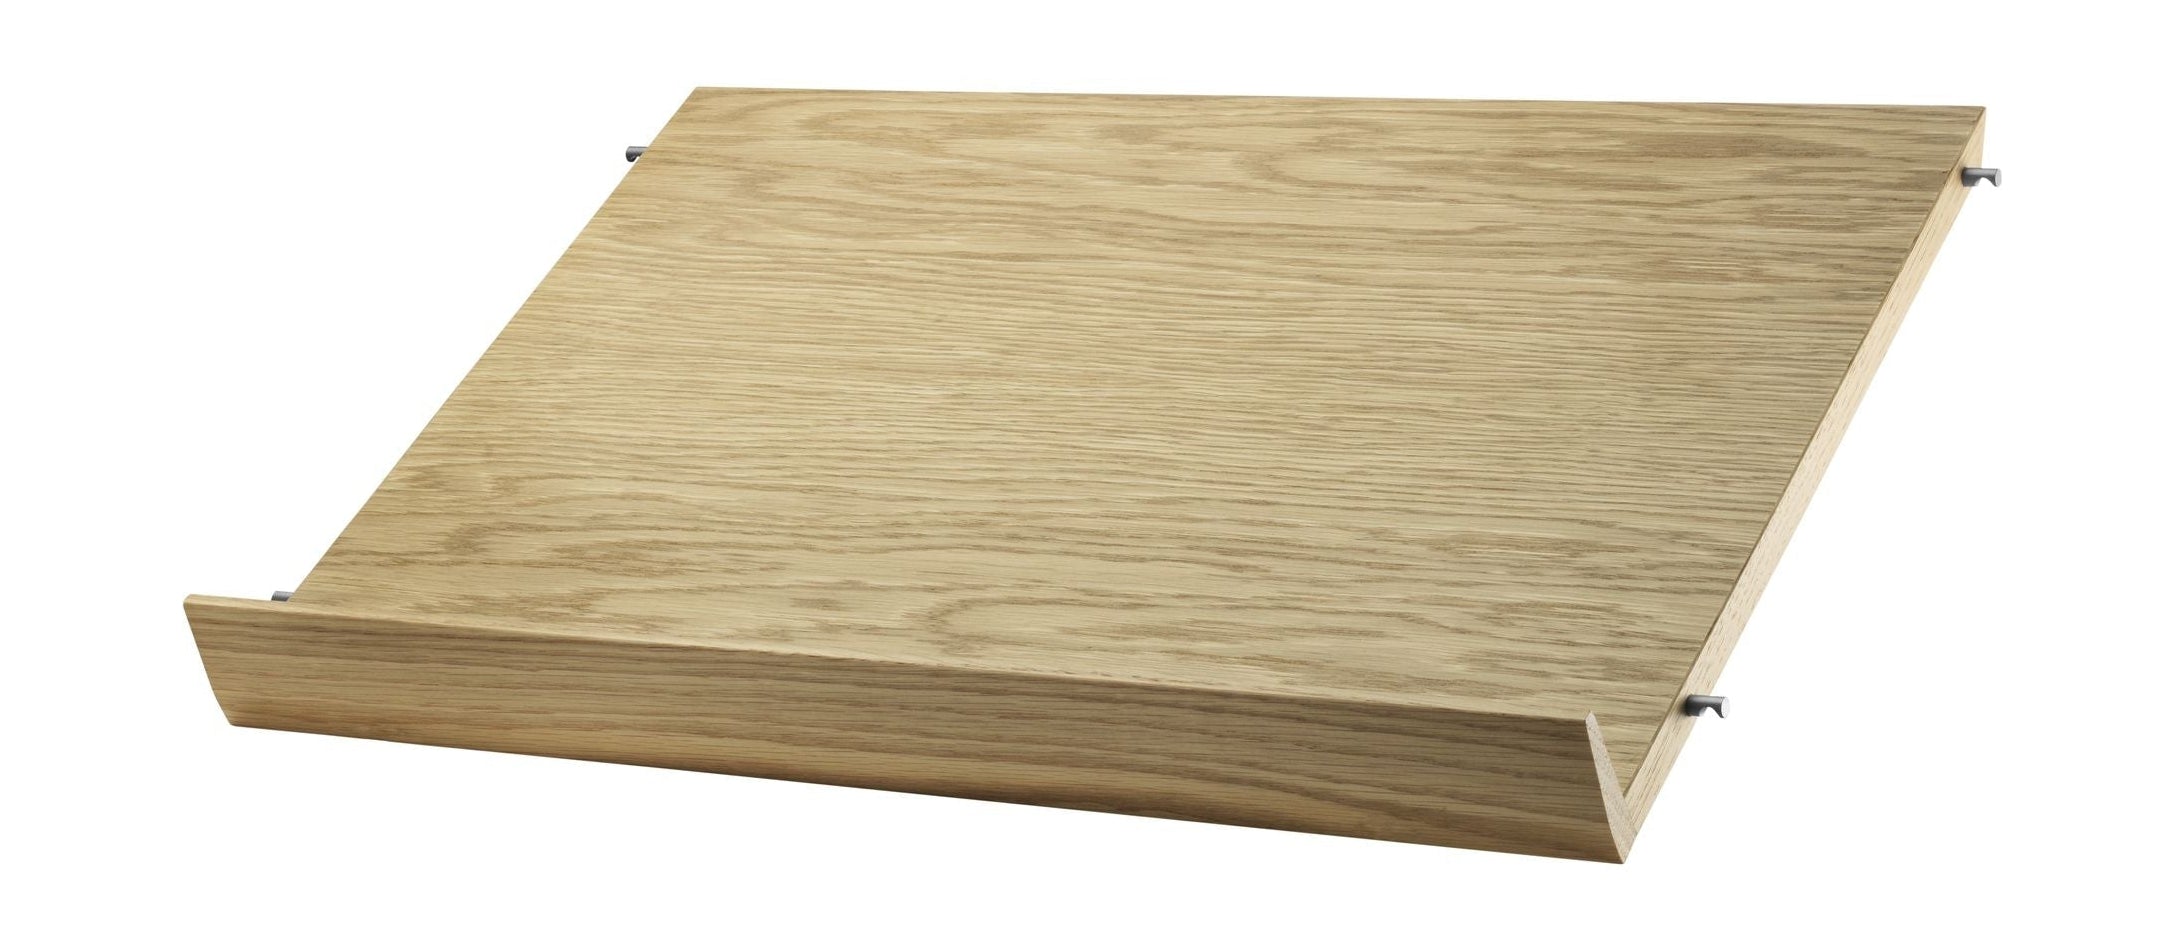 Strengur húsgögn strengjakerfi tímaritsbakkinn Wood Oak, 30x58 cm